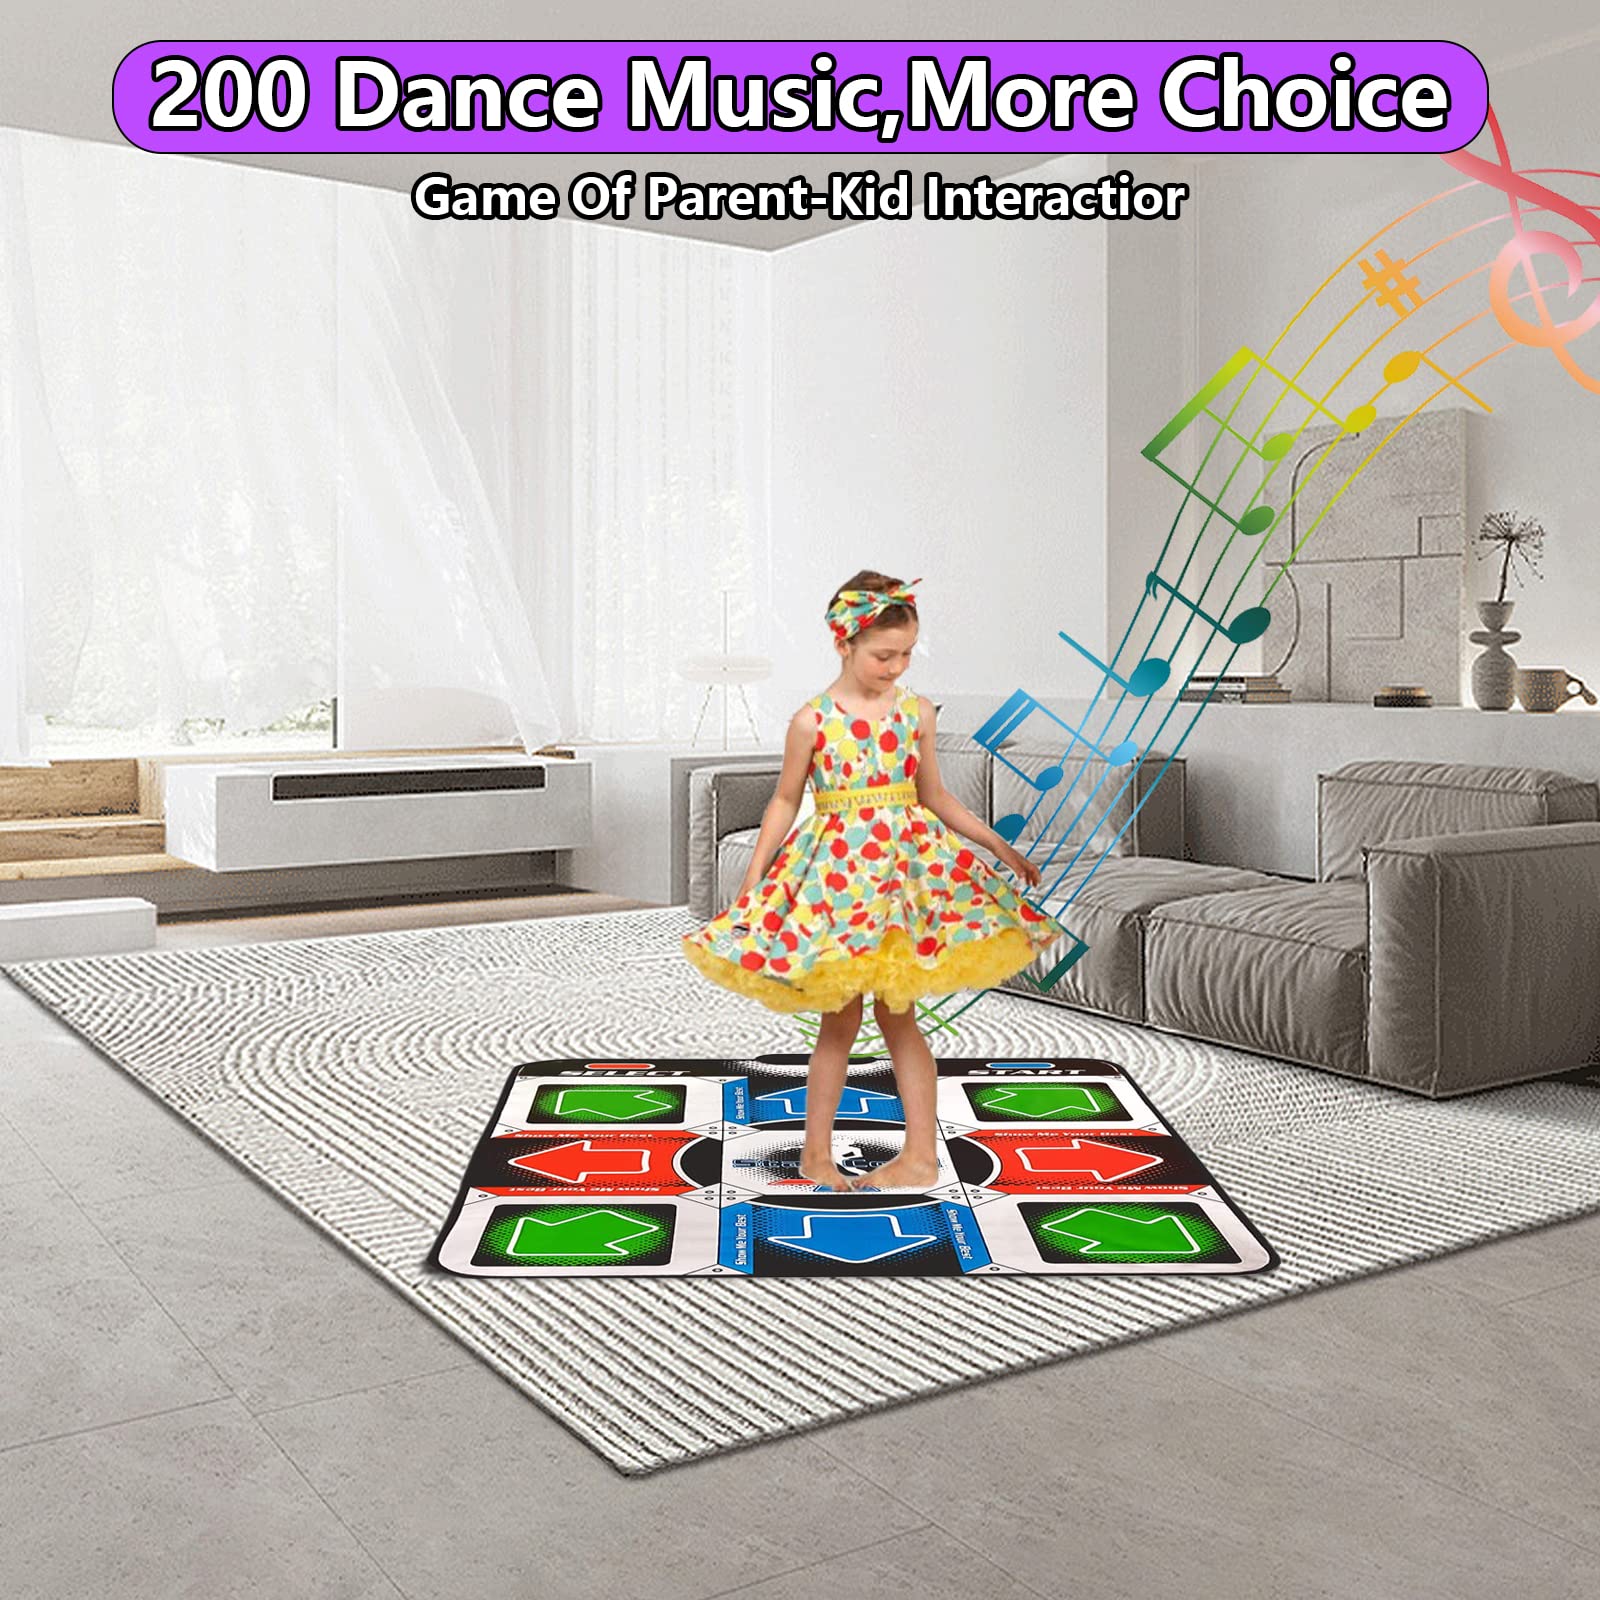 Dance Mat Single Dancing Mats for Kids Adults Musical Electronic Dance Mat Dance Gaming Blanket Dance Step Pad Non-Slip TV RCA Port 200 Songs 68 Games Gift for Girls Boys